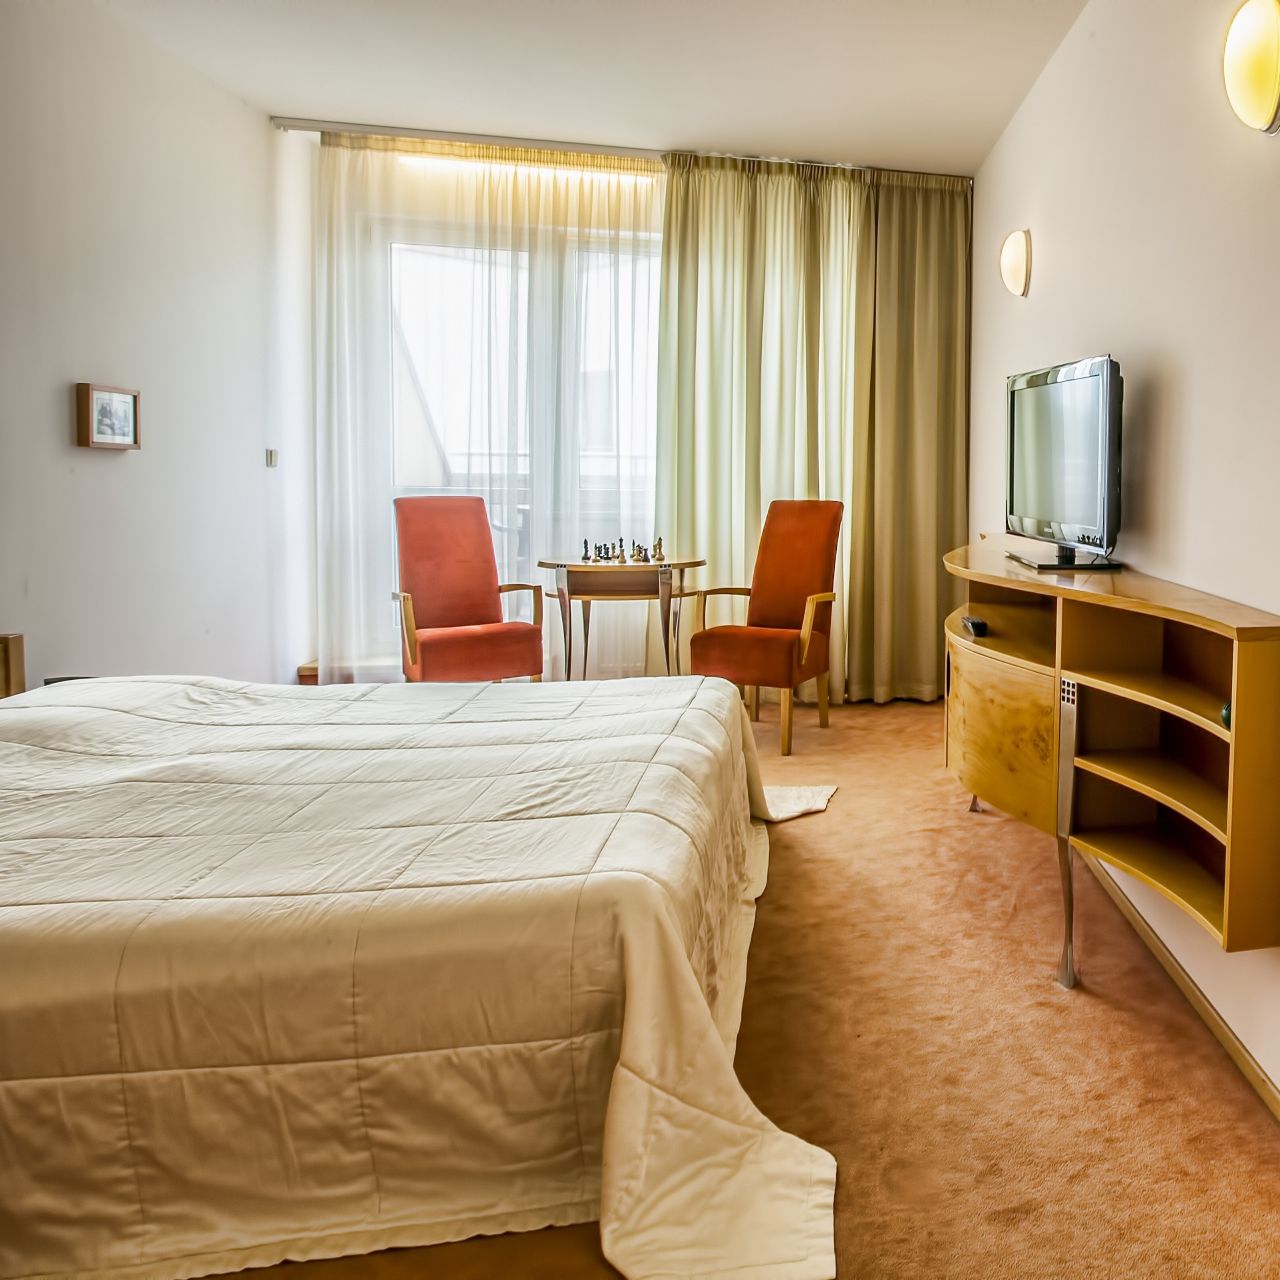 Hotel Set - Bratislava - Great prices at HOTEL INFO